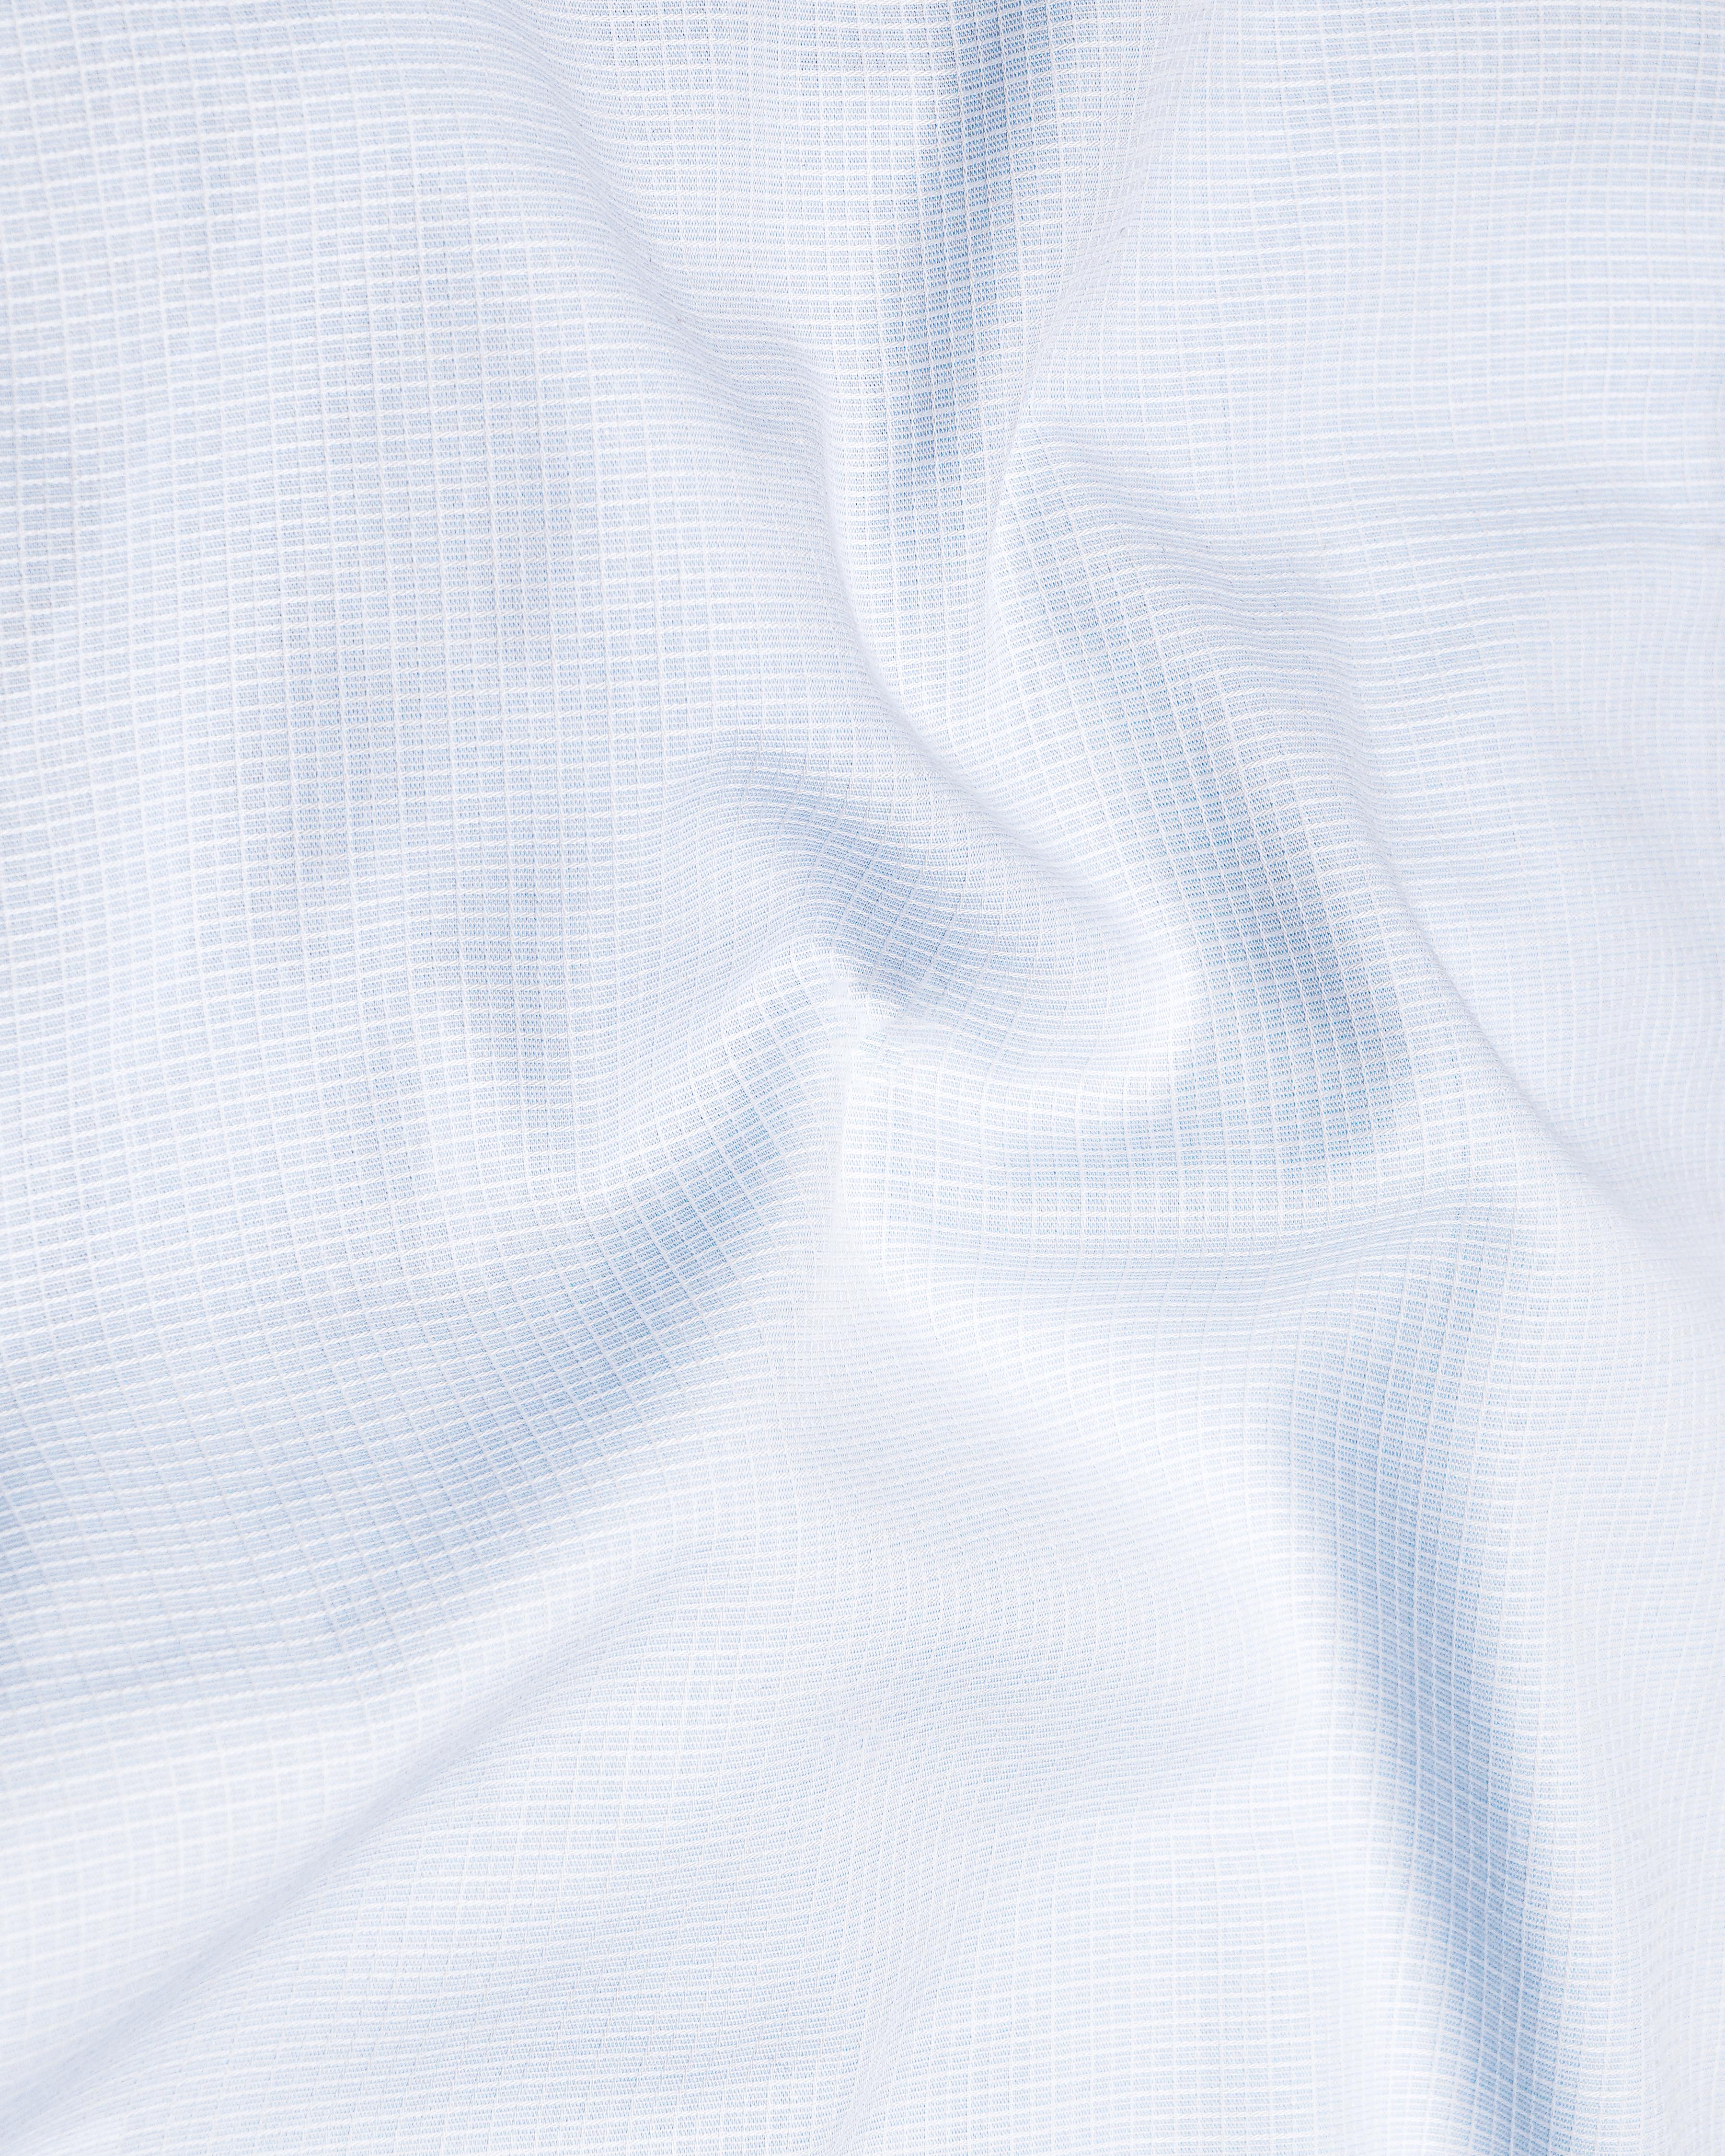 Solitude Blue Dobby Textured Striped Premium Giza Cotton Shirt 8459-M-38,8459-M-H-38,8459-M-39,8459-M-H-39,8459-M-40,8459-M-H-40,8459-M-42,8459-M-H-42,8459-M-44,8459-M-H-44,8459-M-46,8459-M-H-46,8459-M-48,8459-M-H-48,8459-M-50,8459-M-H-50,8459-M-52,8459-M-H-52